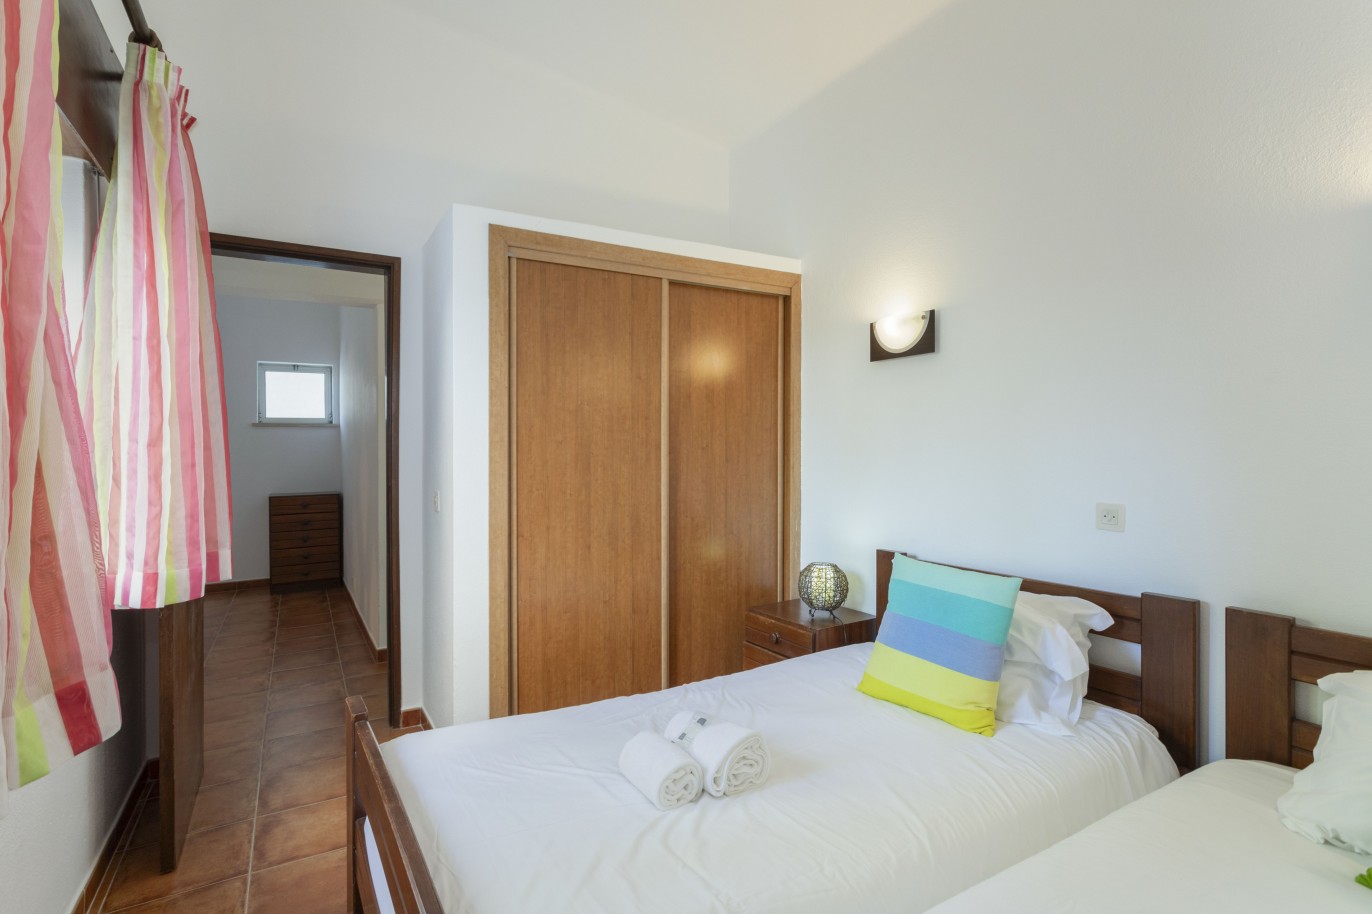 2-bedroom Apartment Duplex, sea view, for sale in Porches, Algarve_247759